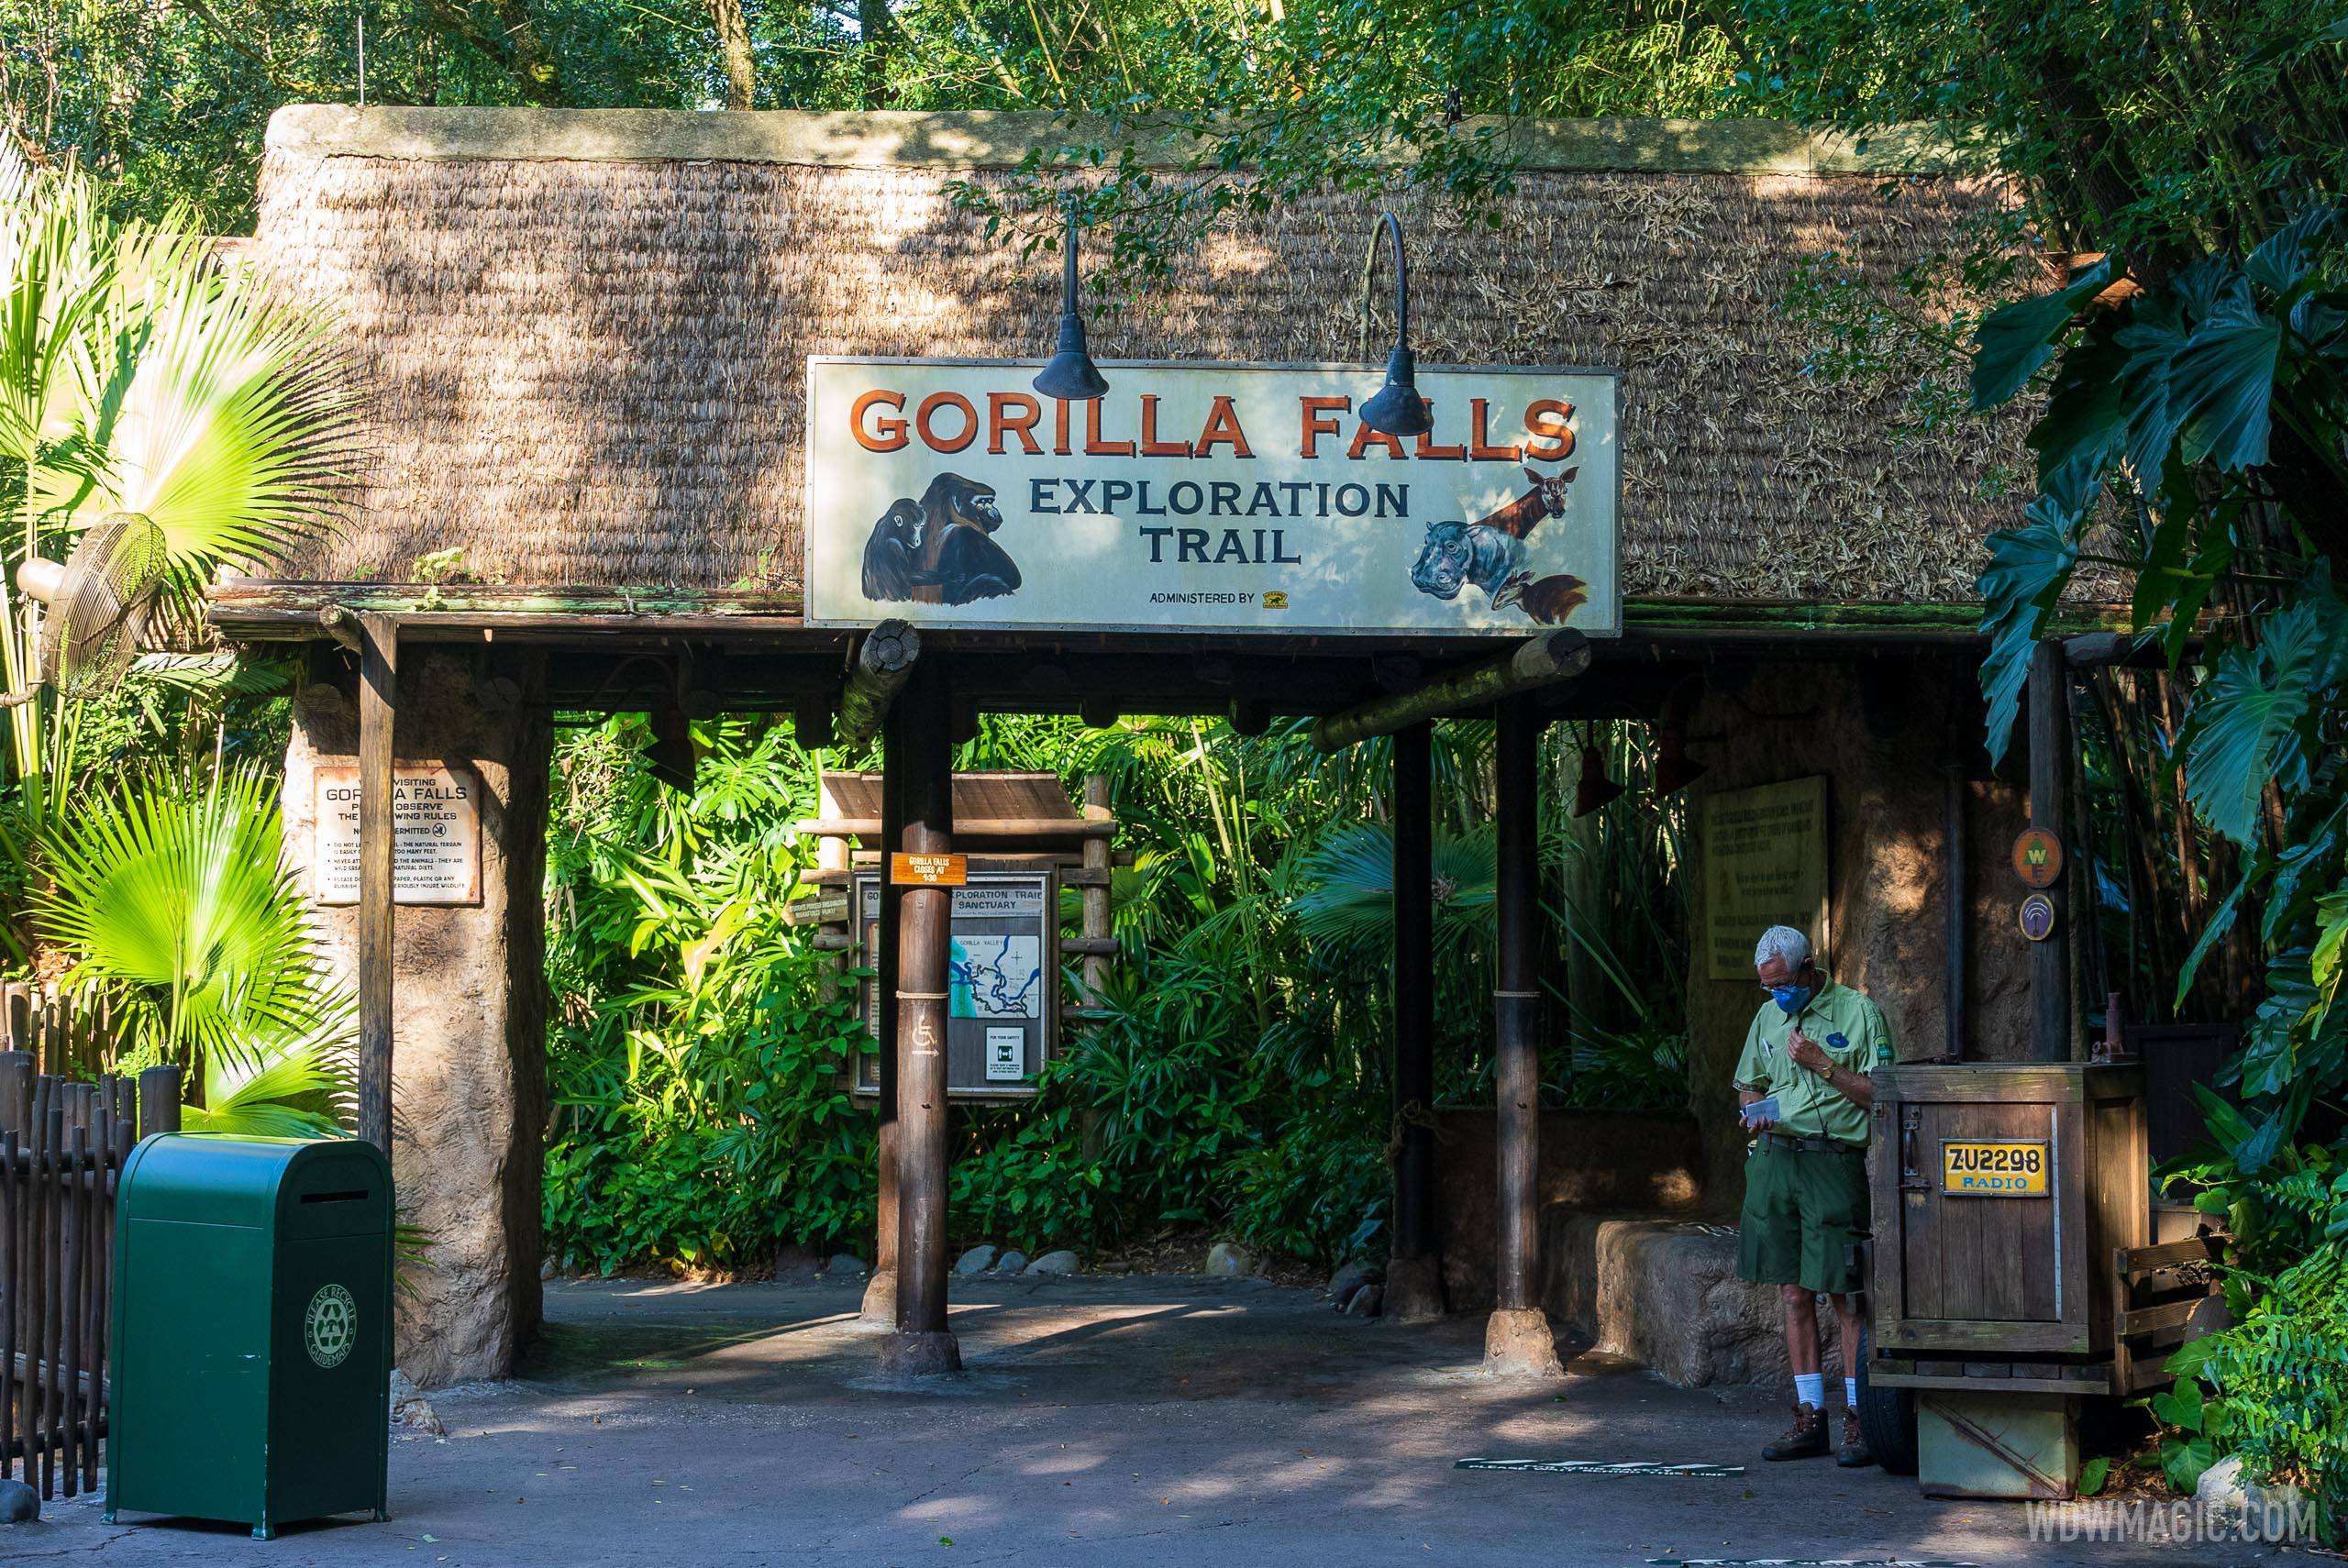 'Gorilla Falls Exploration Trail' renamed to 'Pangani Forest Exploration Trail'